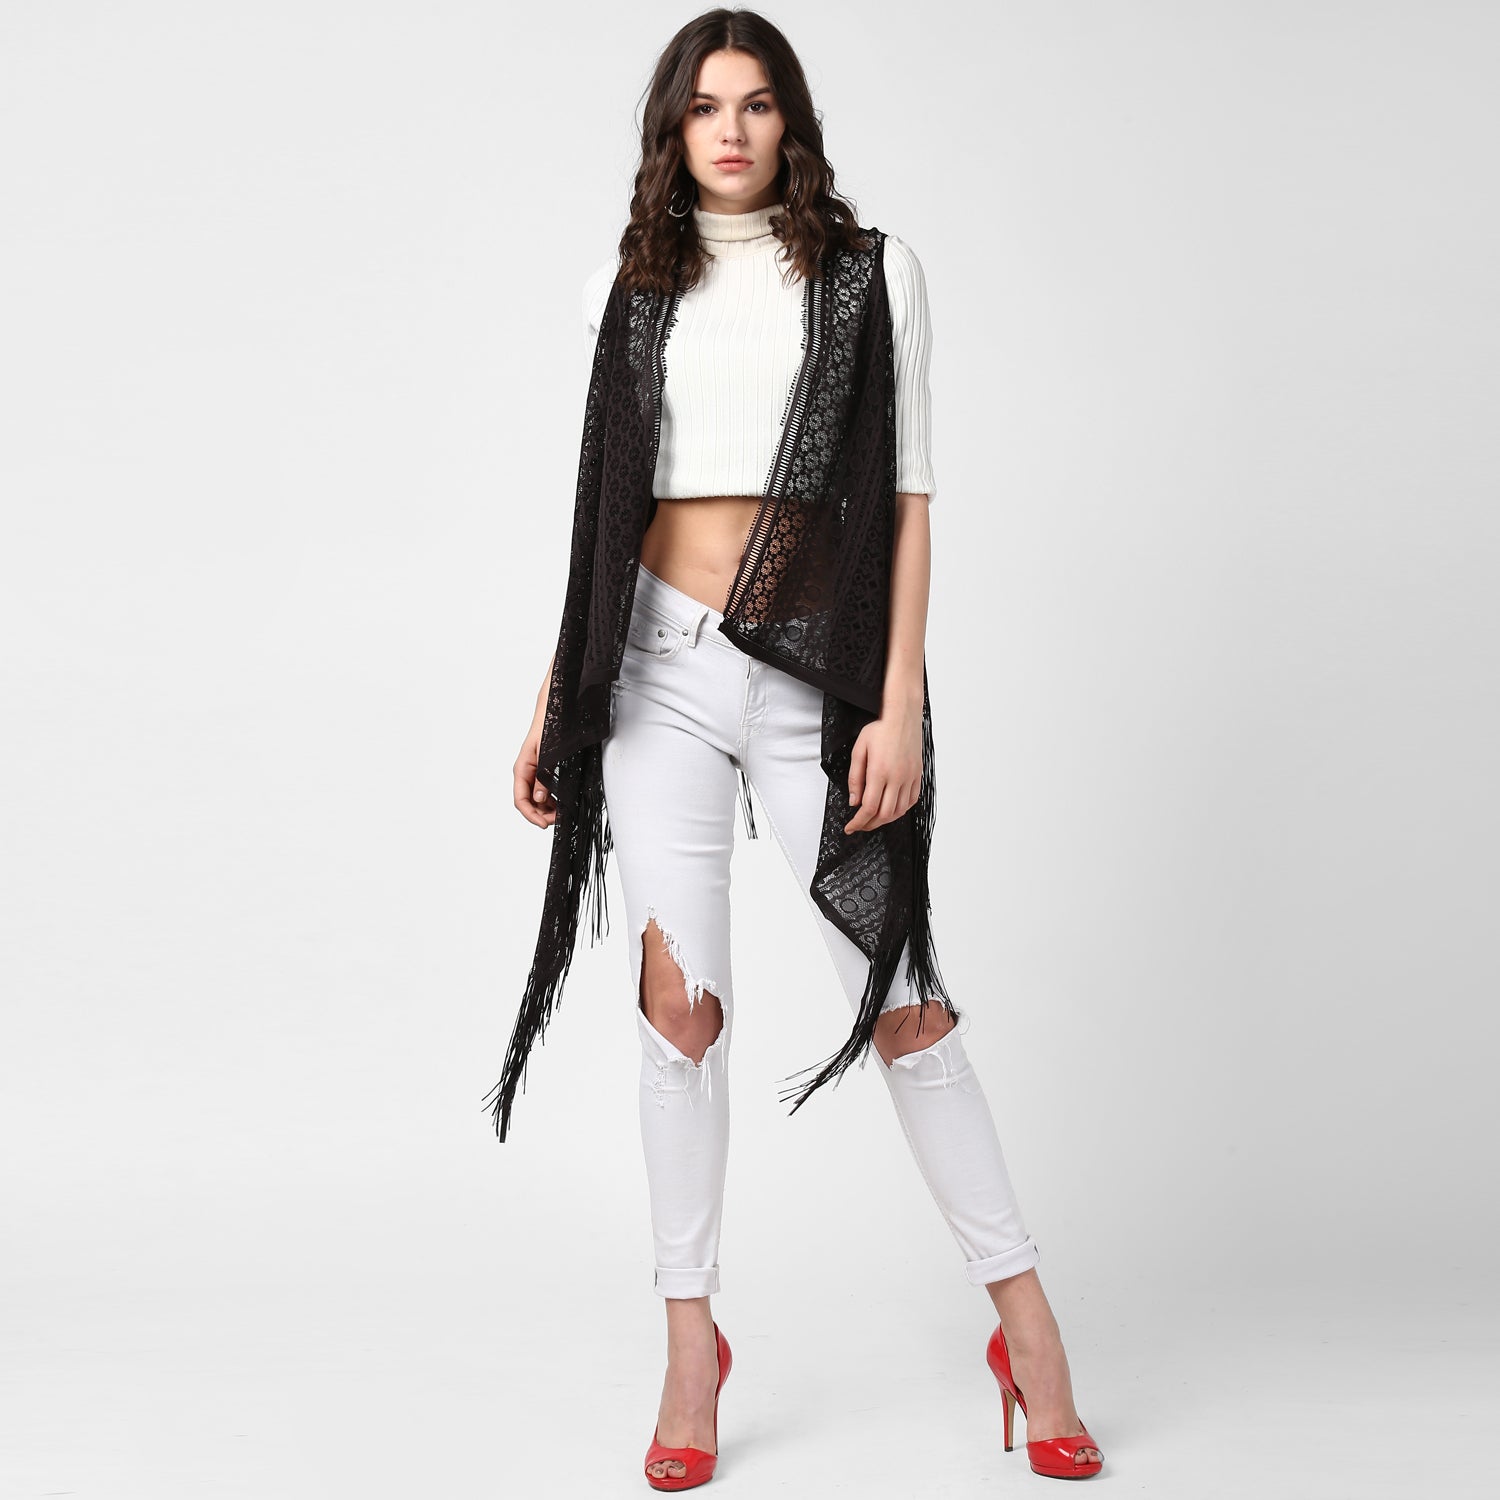 Women's Black Long Lace Shrug - StyleStone